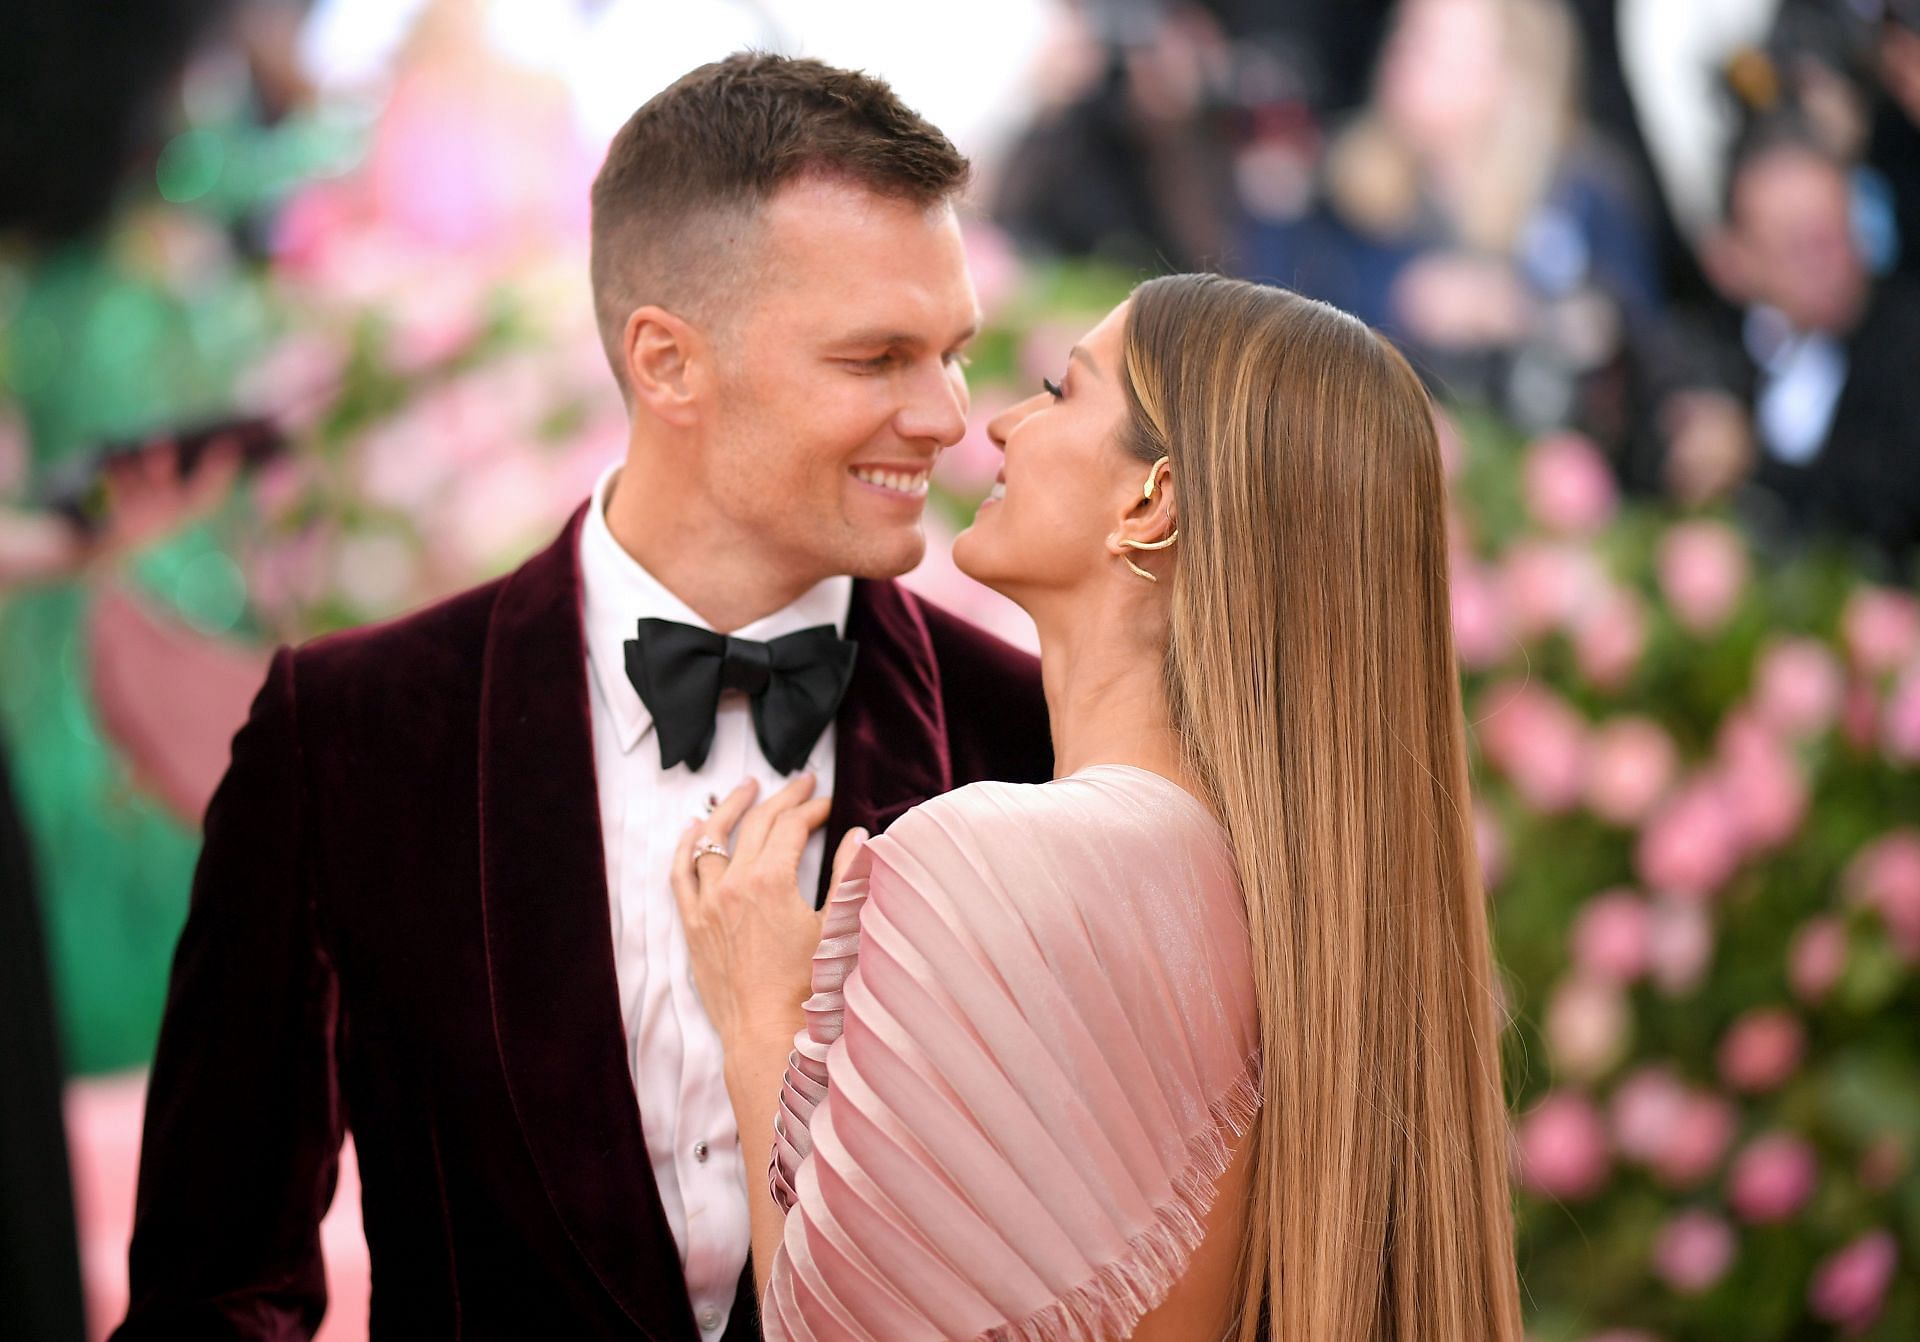 Tom Brady and Gisele Bundchen arrive at the 2019 Met Gala